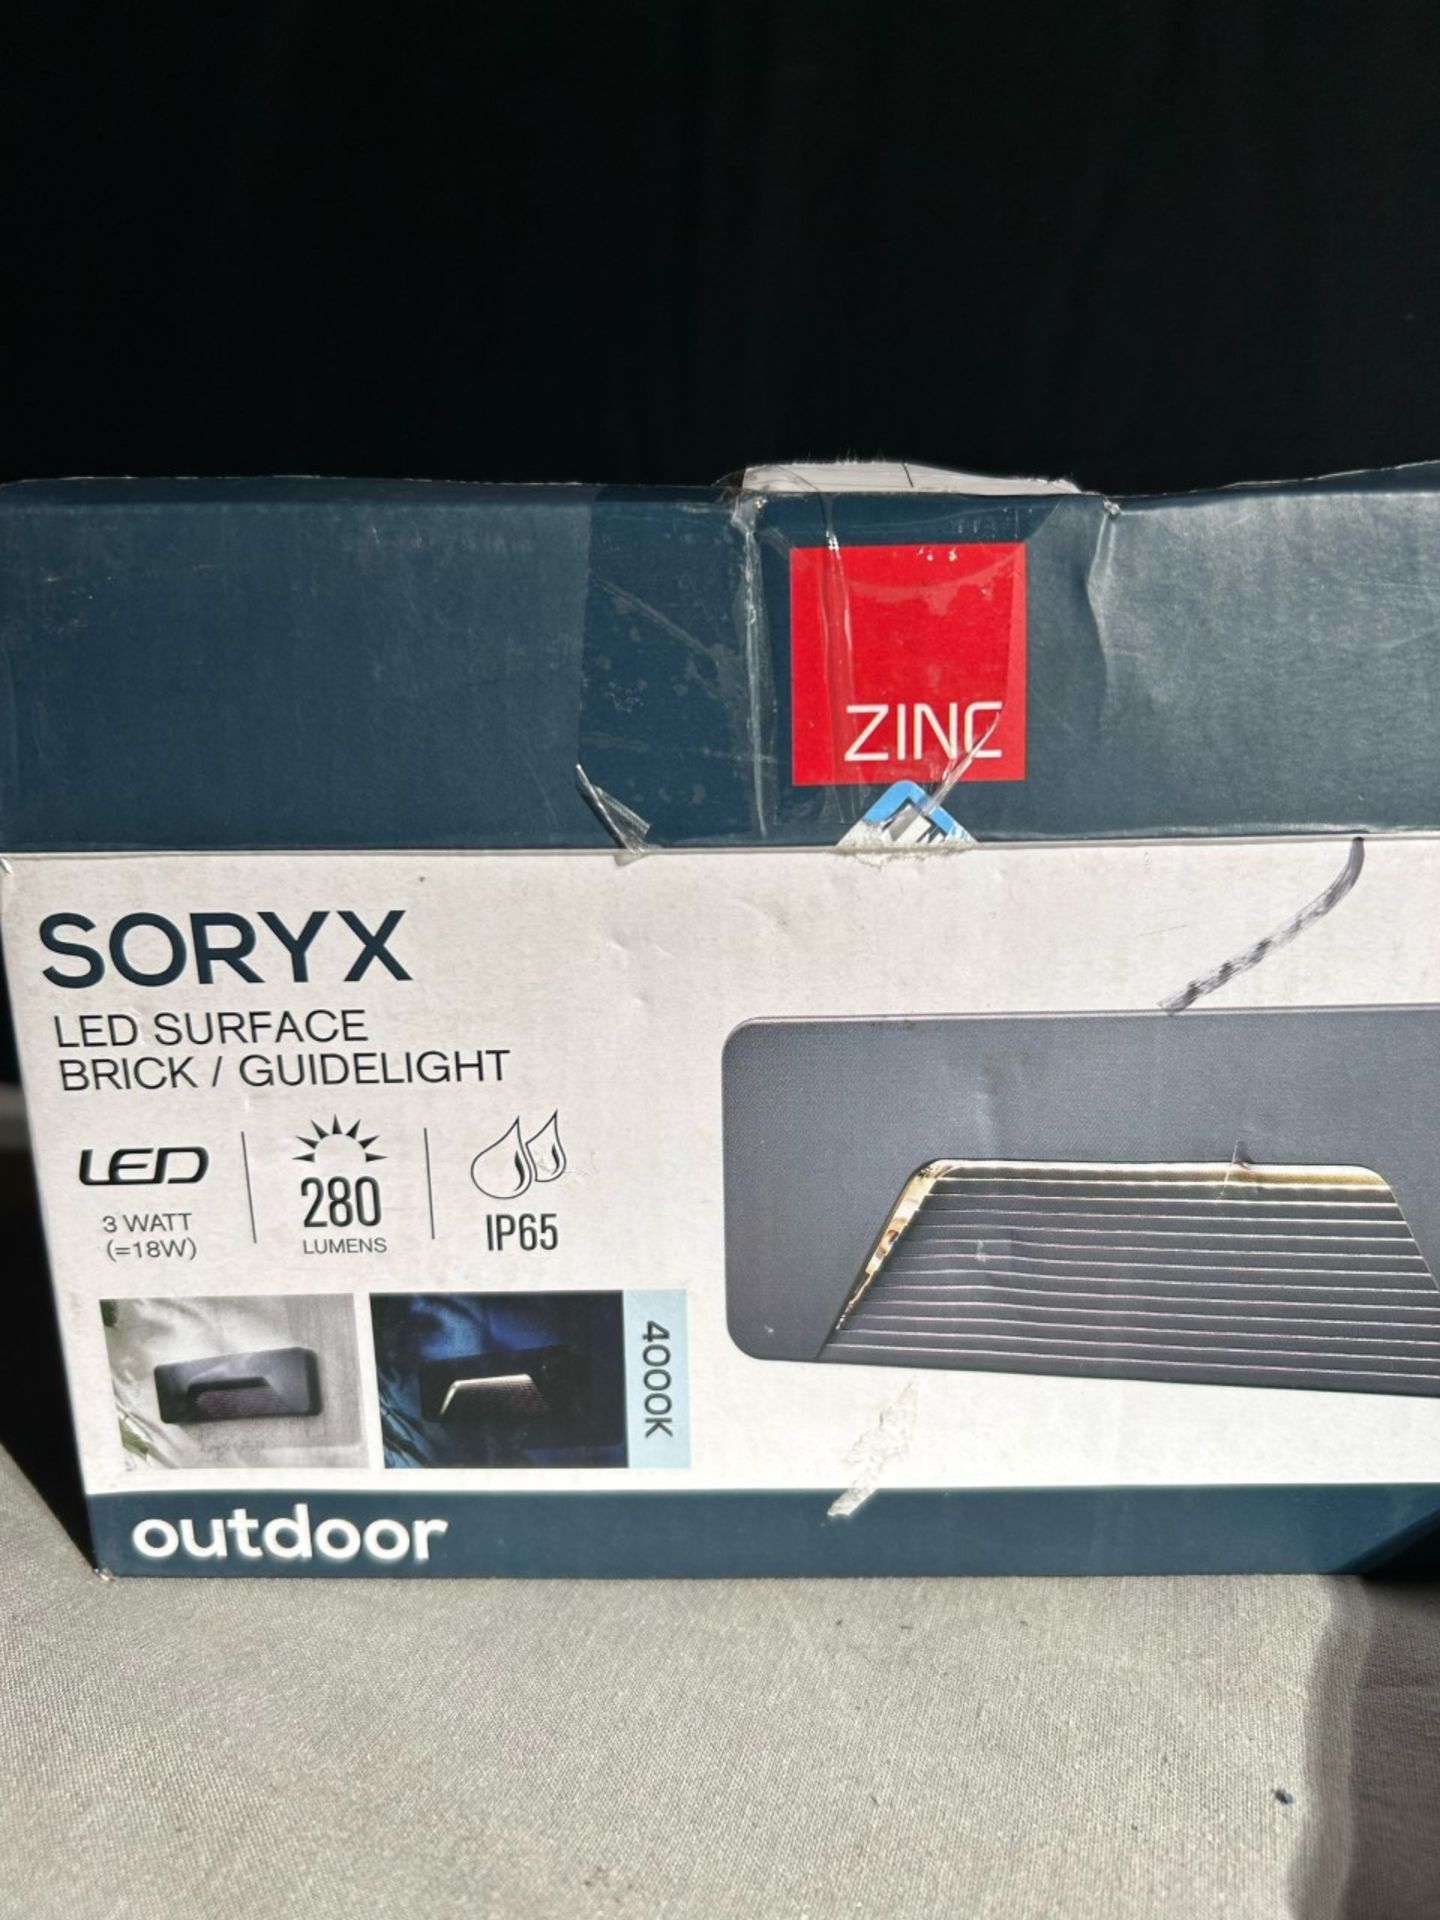 Zinc Soryx LED surface brick/ guide light. Matt anthracite charcoal colour. New in box - Bild 3 aus 3